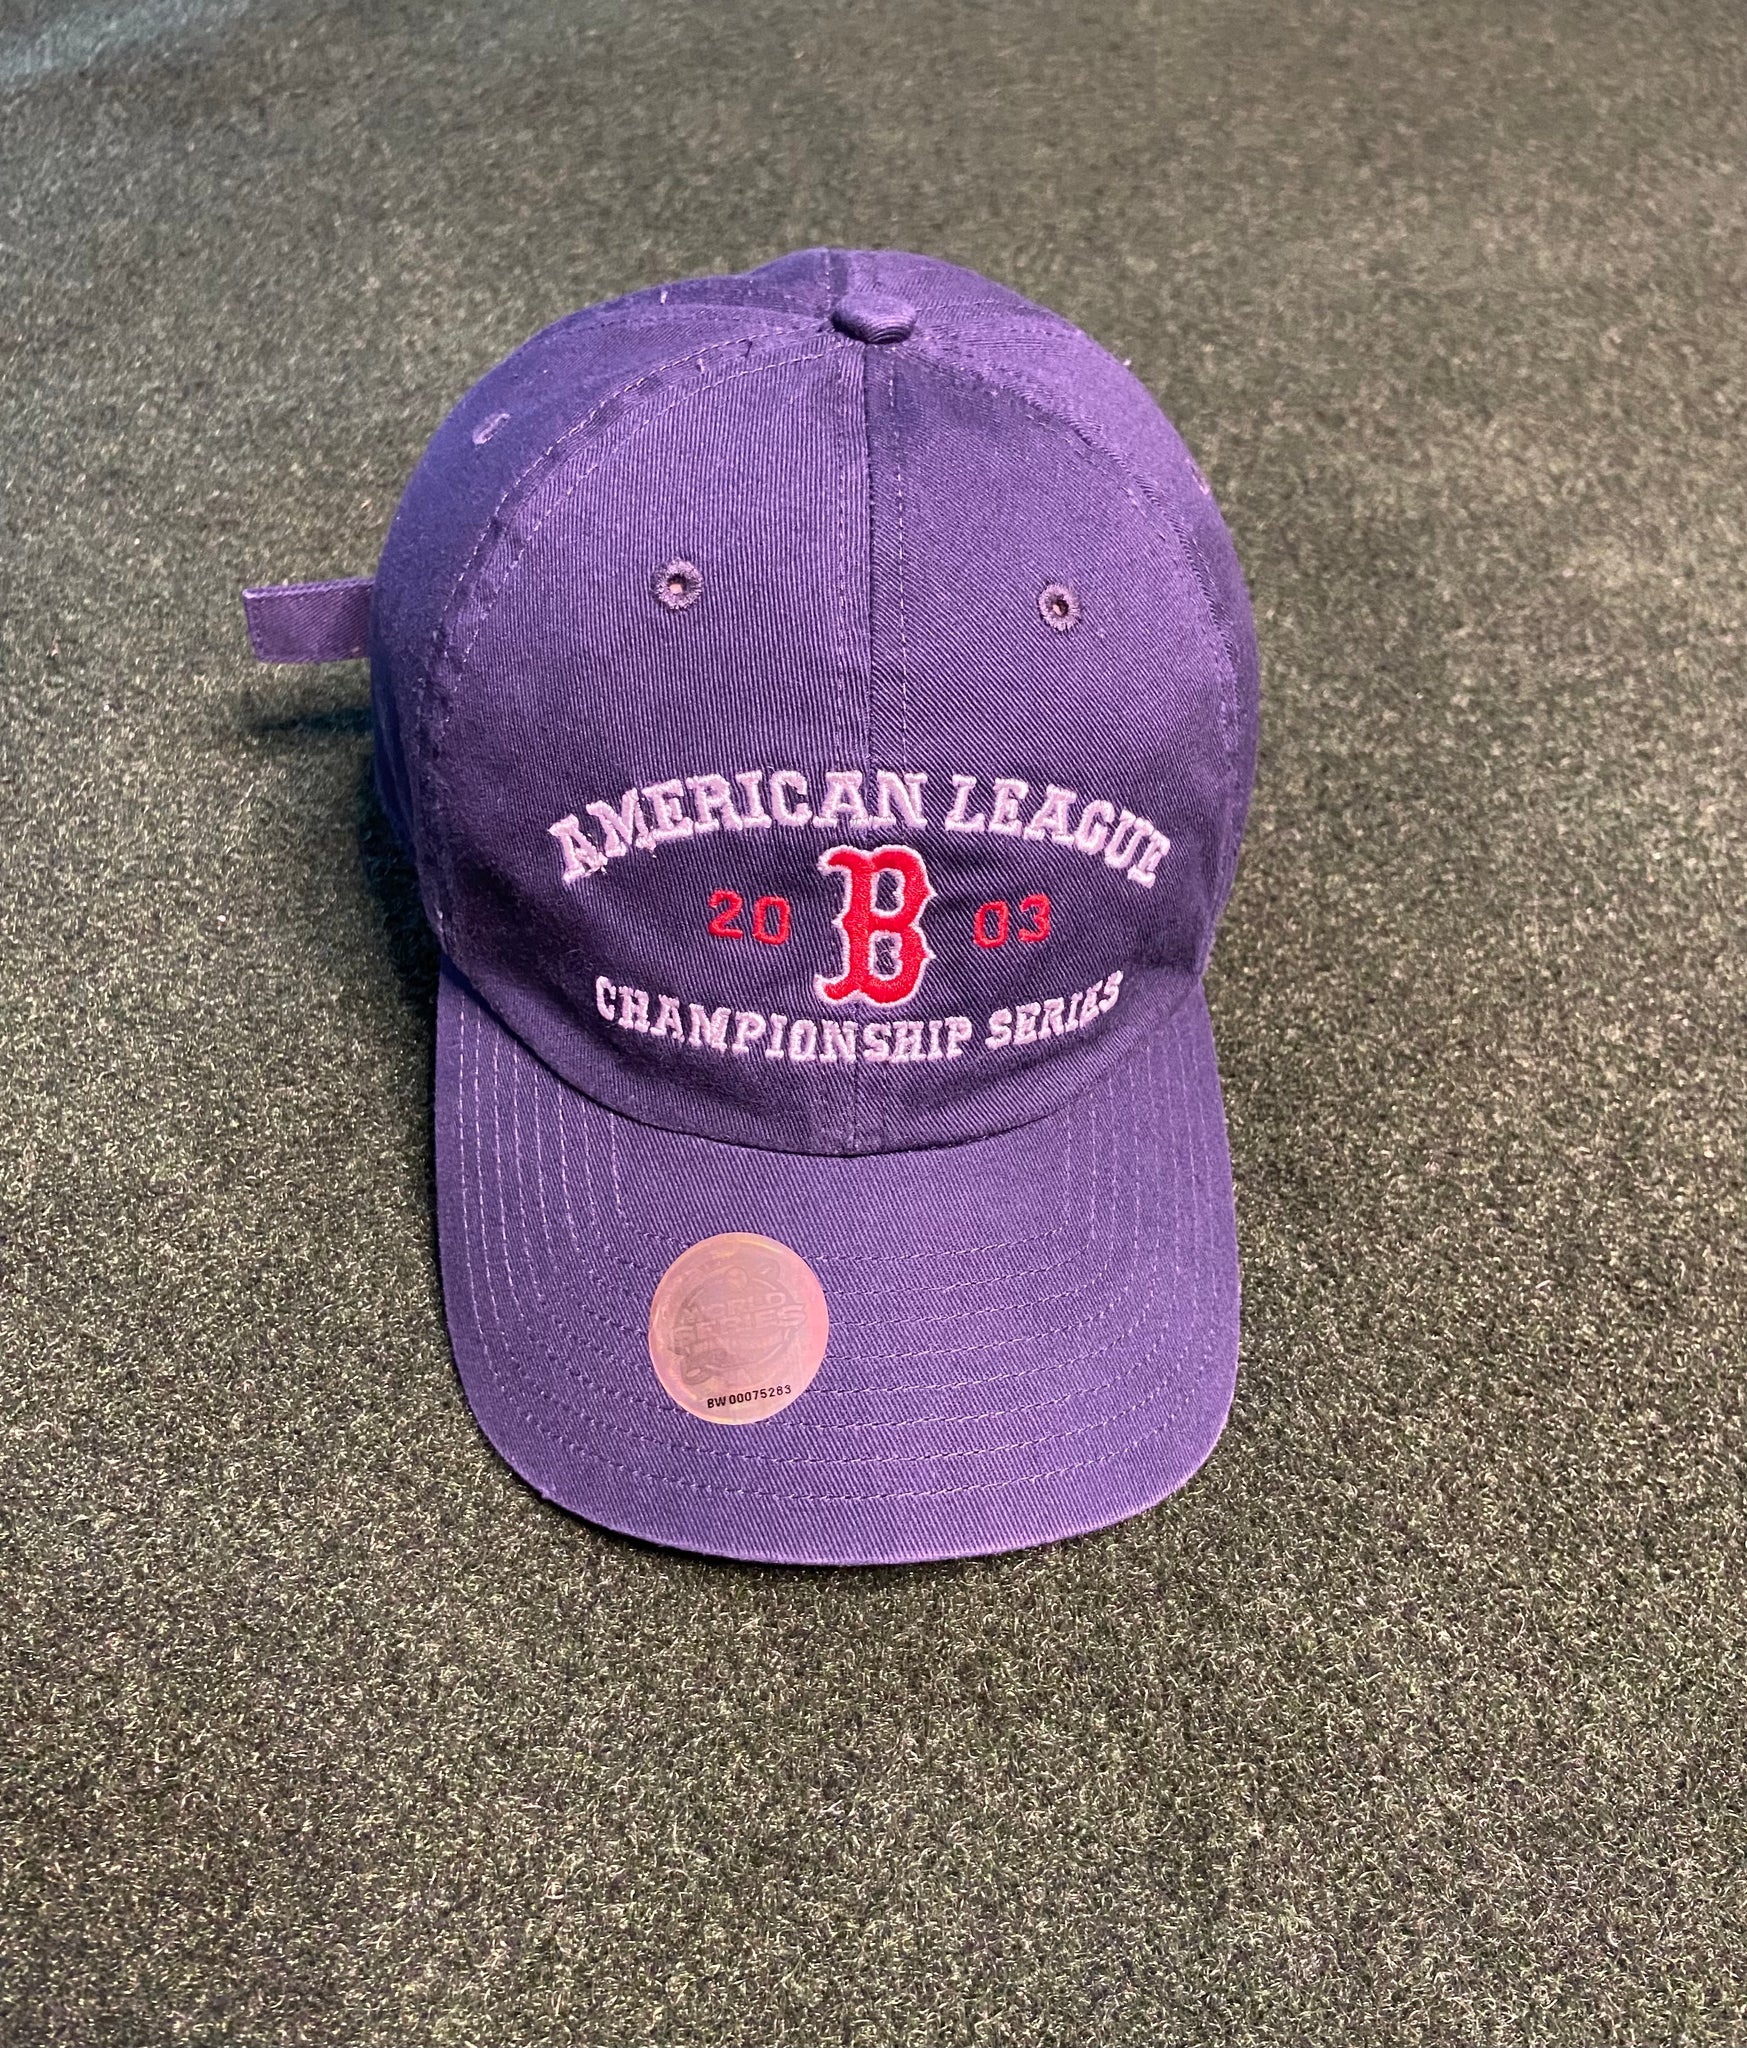 Bootleg Boston Red Sox Hat | SidelineSwap